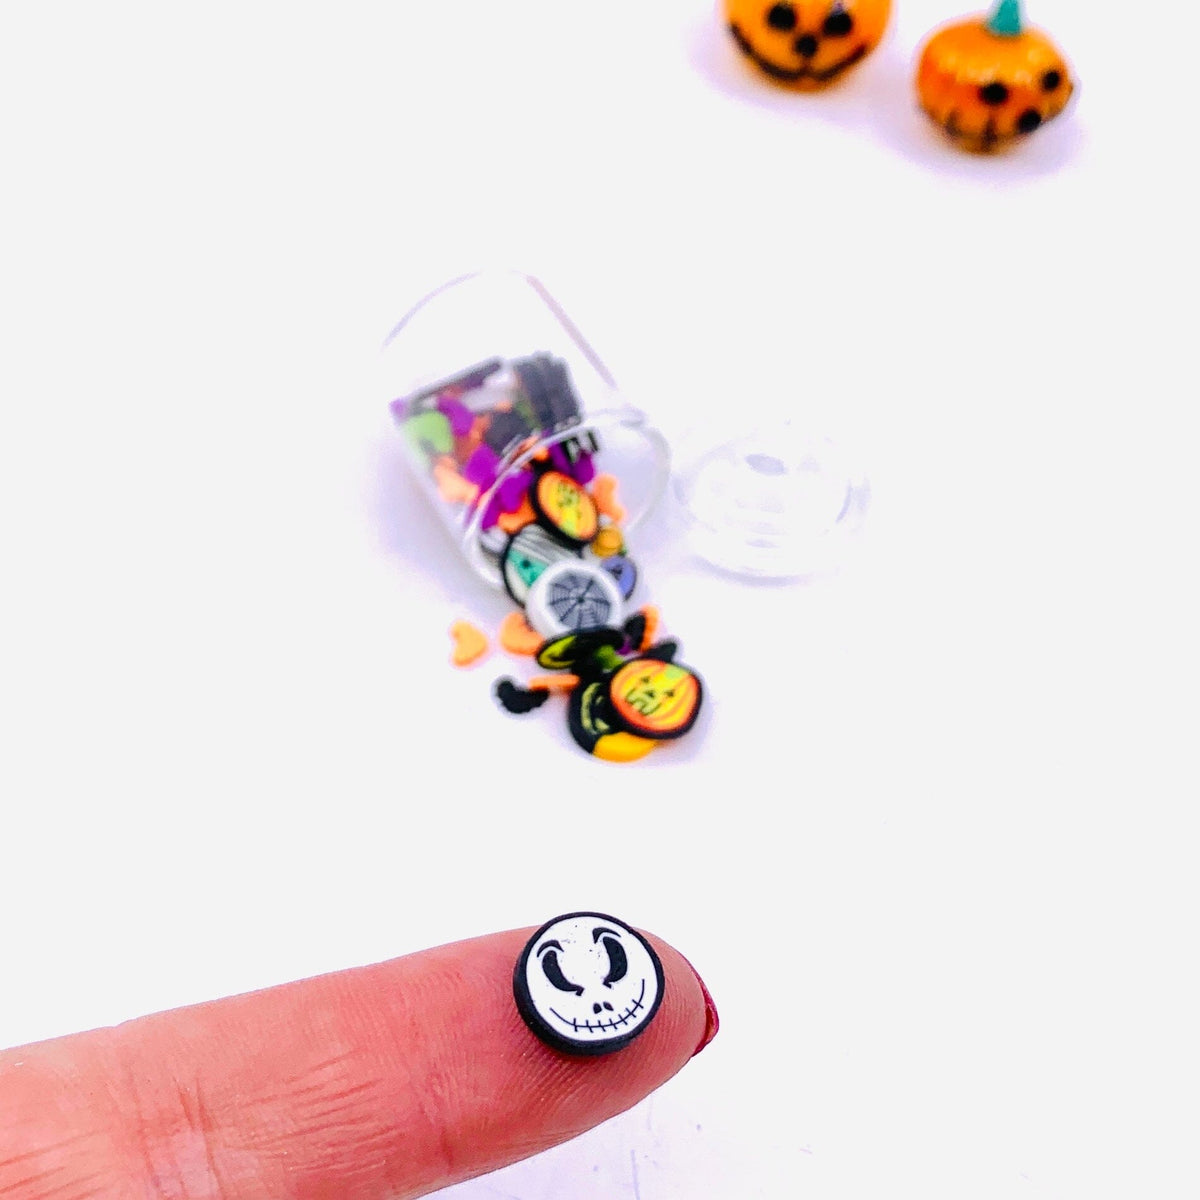 Tiniest Jar of Halloween Treats Miniature - 